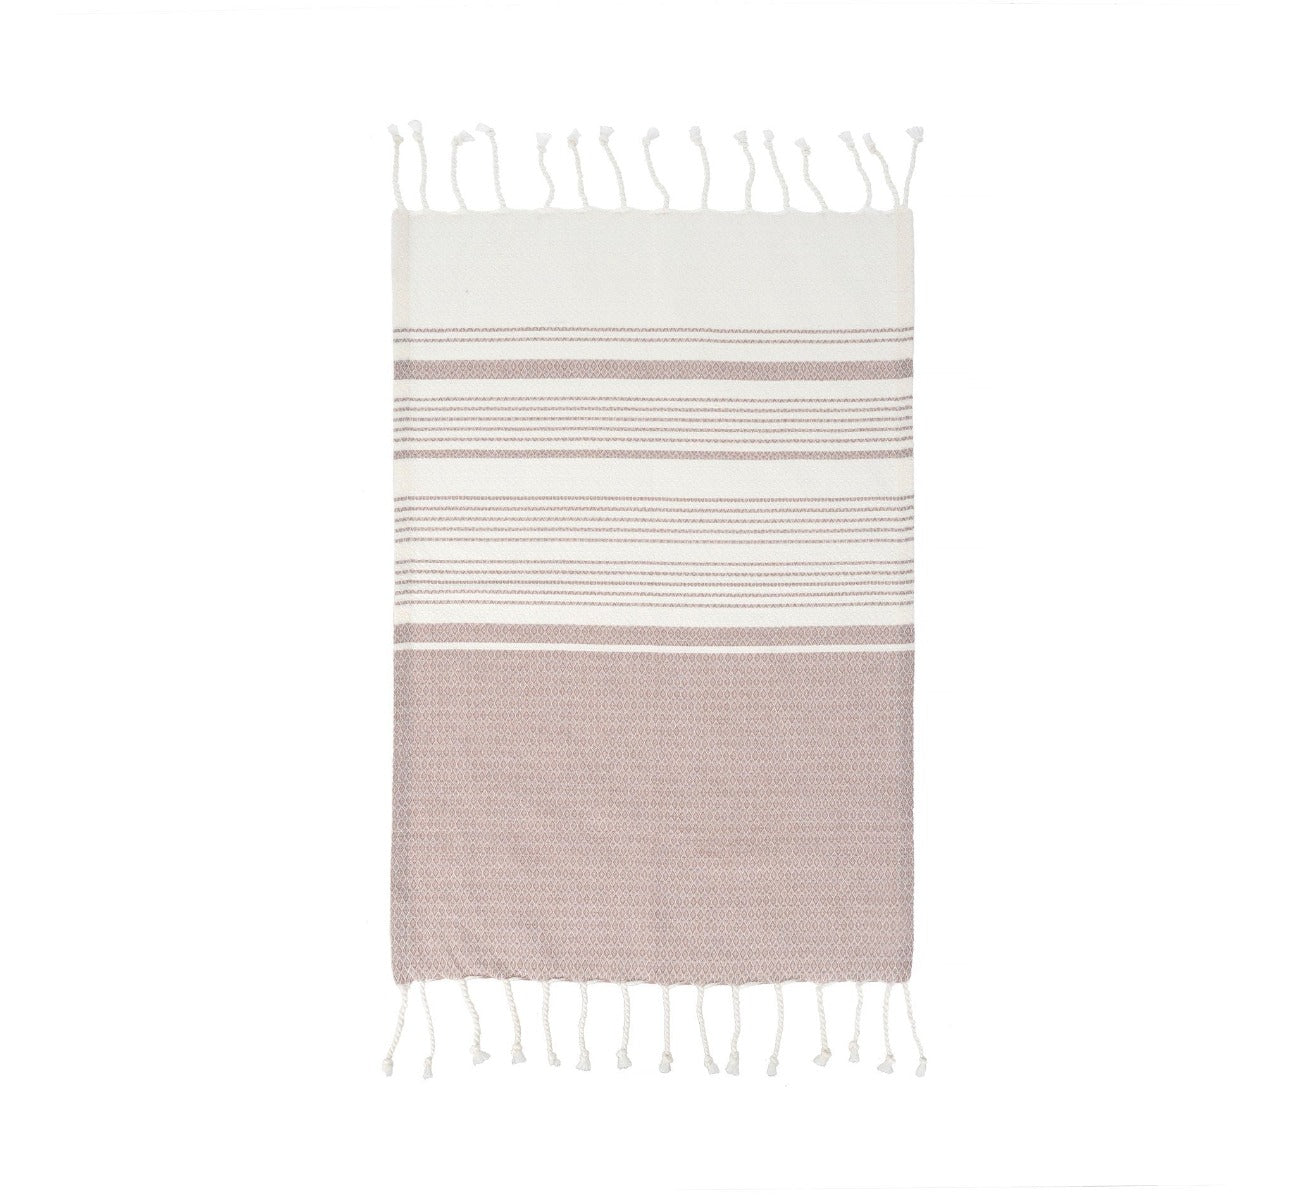 Willow Turkish Hand Towel - Diamond pattern, lavender color & hand-twisted tassels -Indaba SKU 1-6082-1 